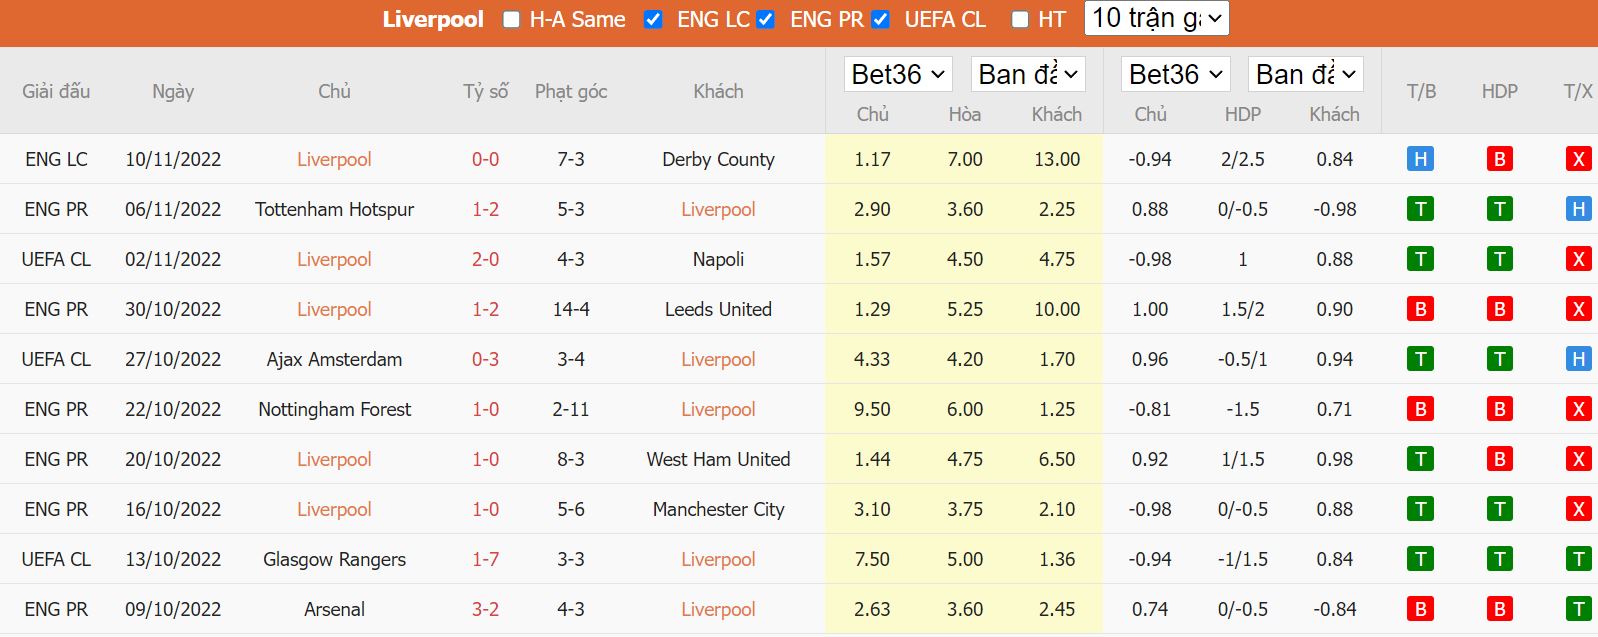 Thành tích gần đây của Liverpool - Premier League